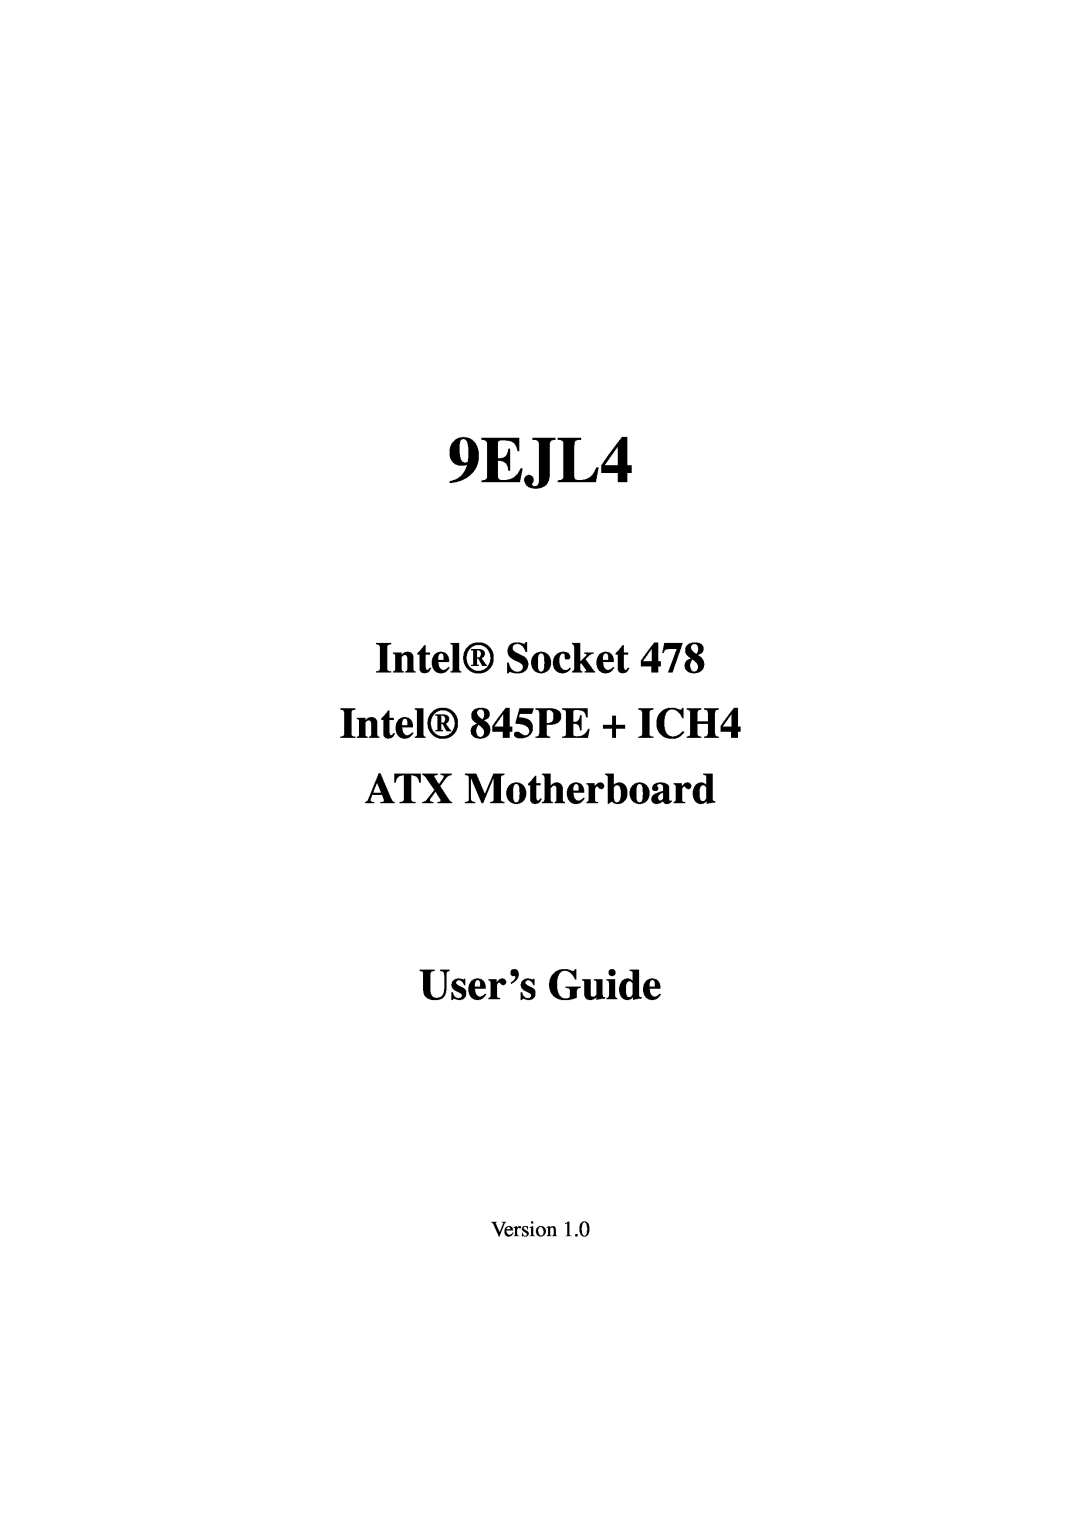 Intel 9EJL4 manual Intel Socket Intel 845PE + ICH4 ATX Motherboard, User’s Guide 